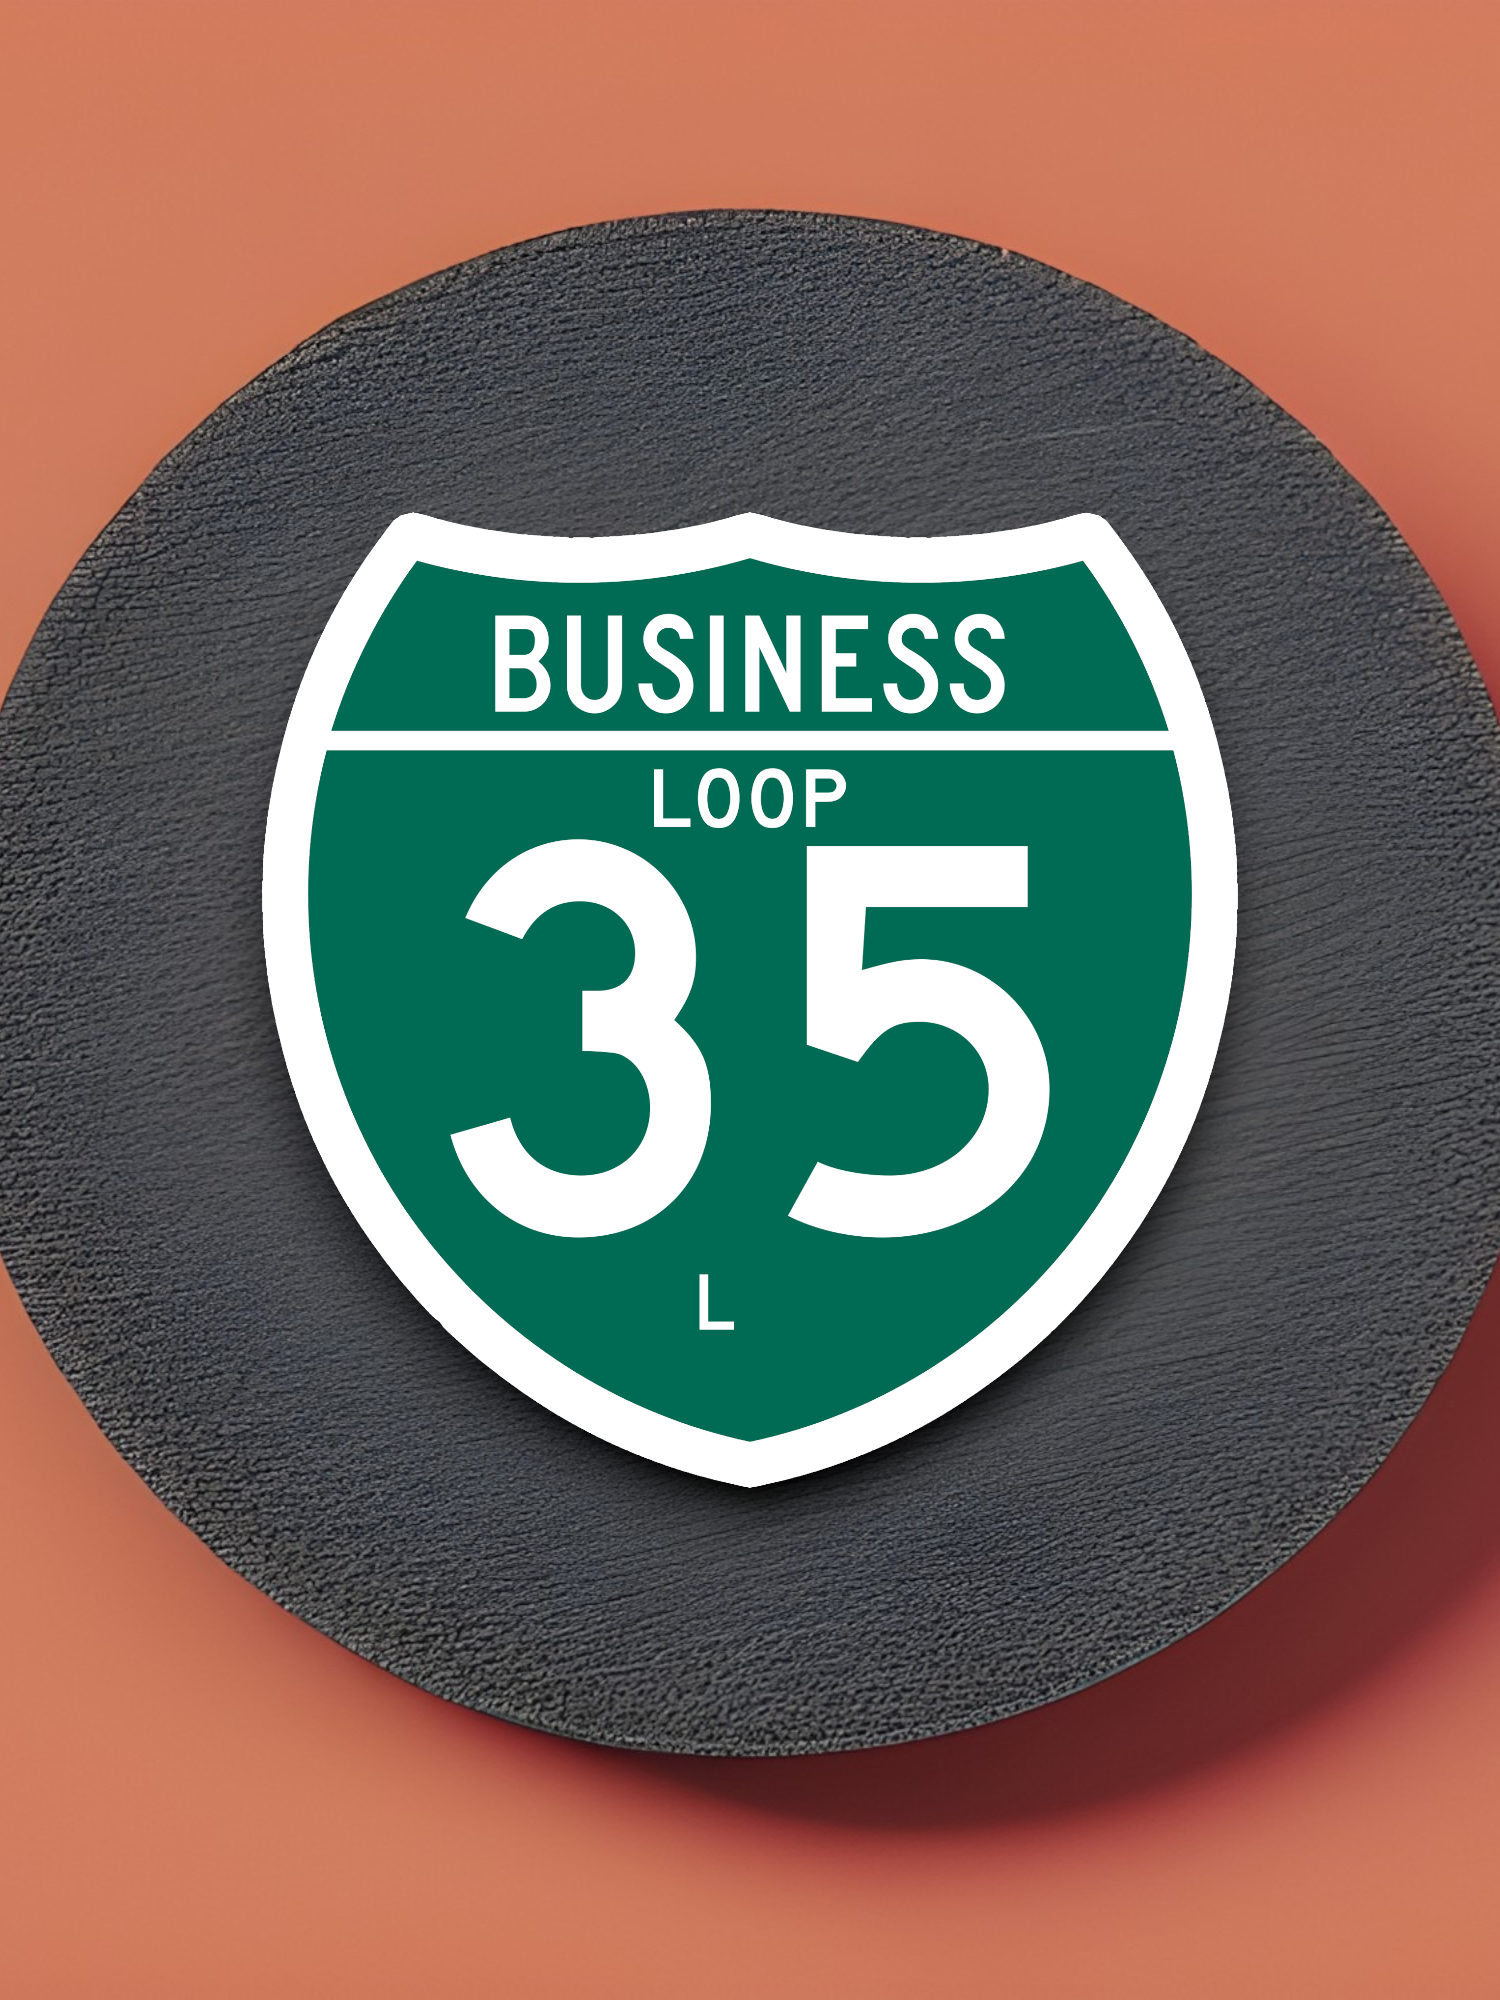 Business Interstate 35-L Texas Road Sign Sticker